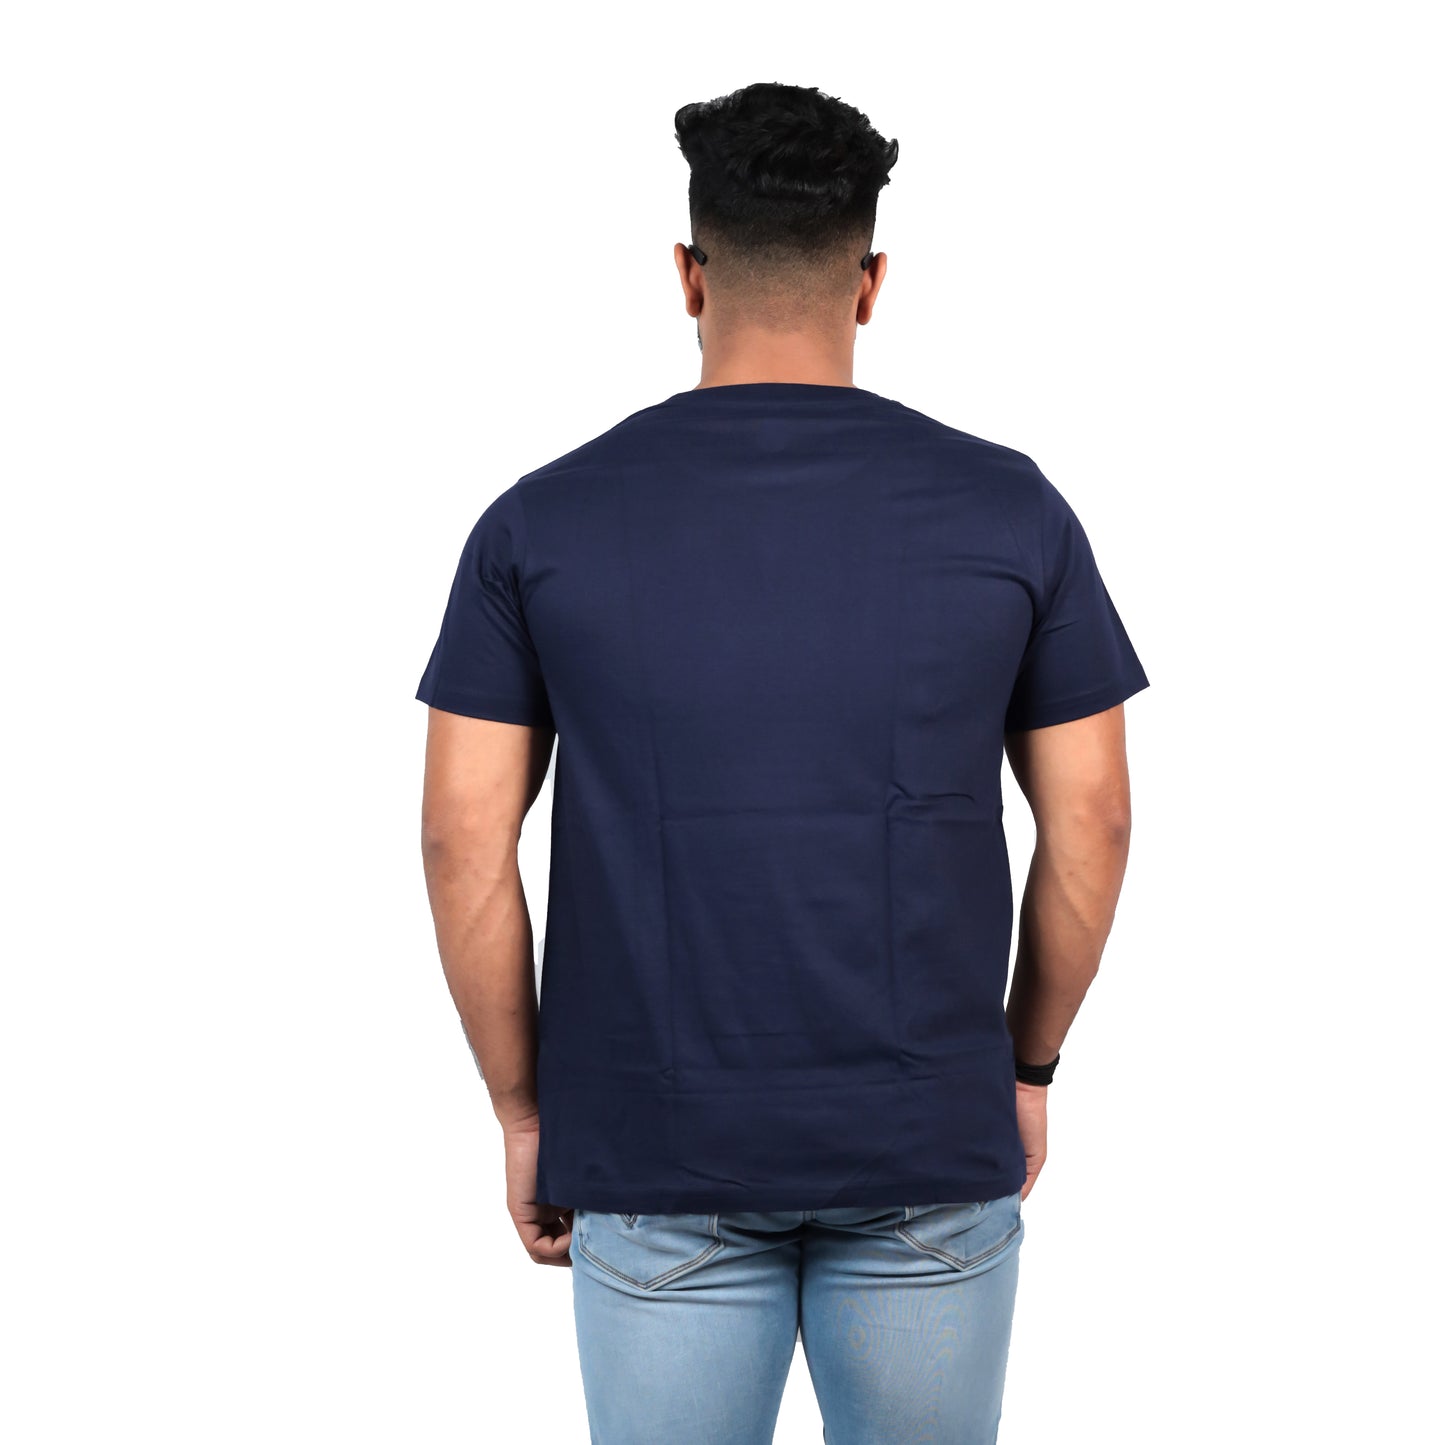 Polar Bear Printed  T-shirt In Navy Blue Color For Men